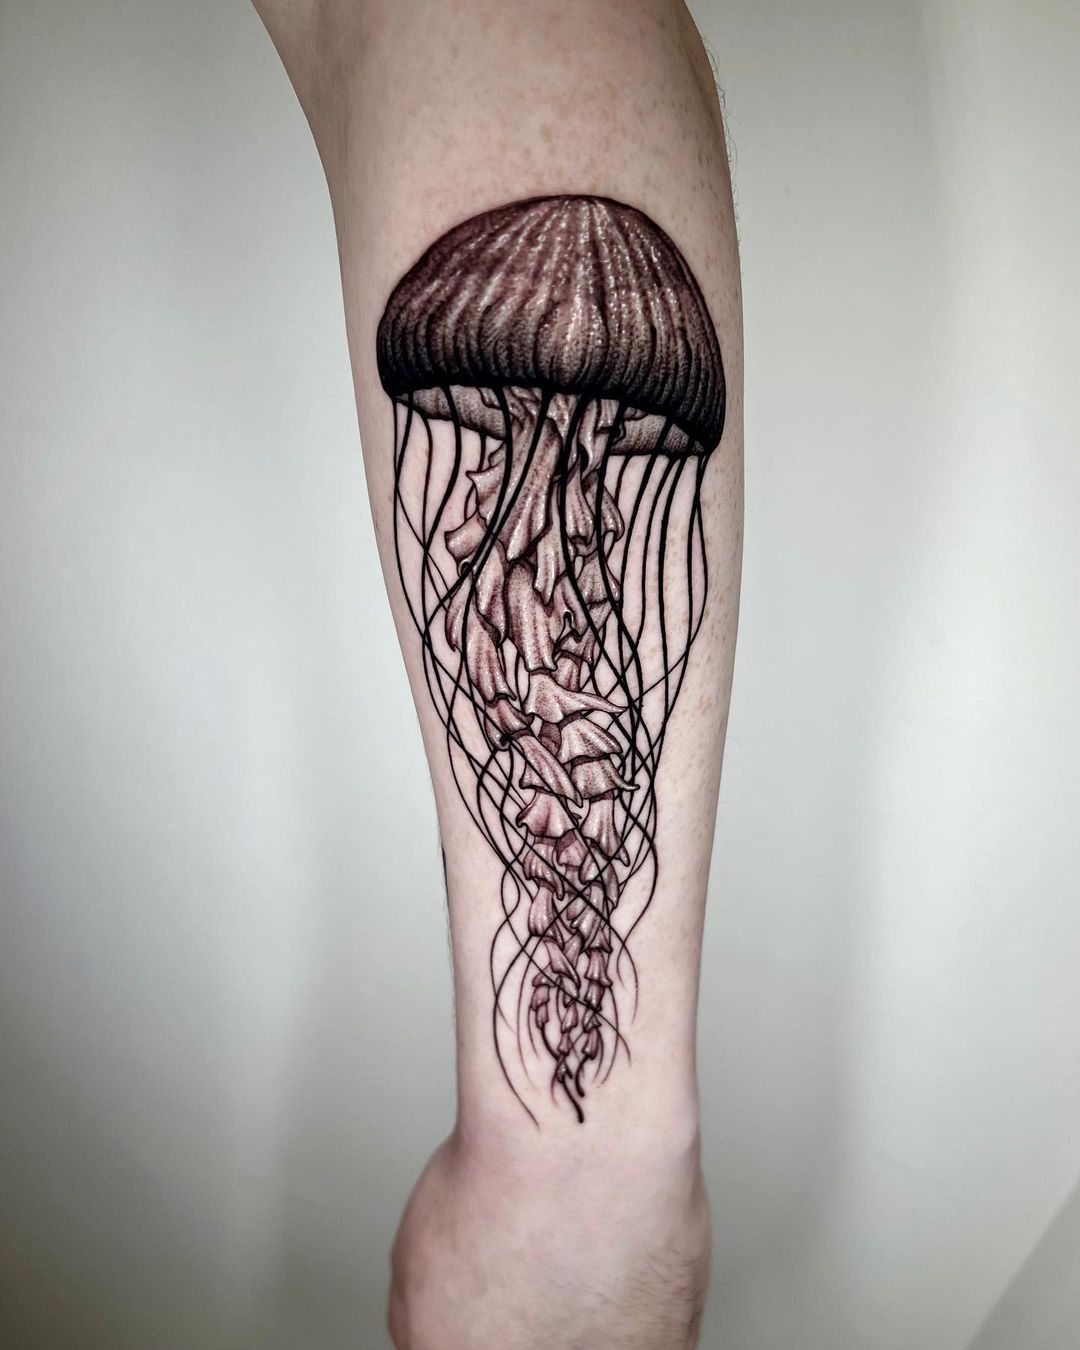 Colorful Jellyfish Tattoo by Jackie Rabbit by jackierabbit12 on DeviantArt